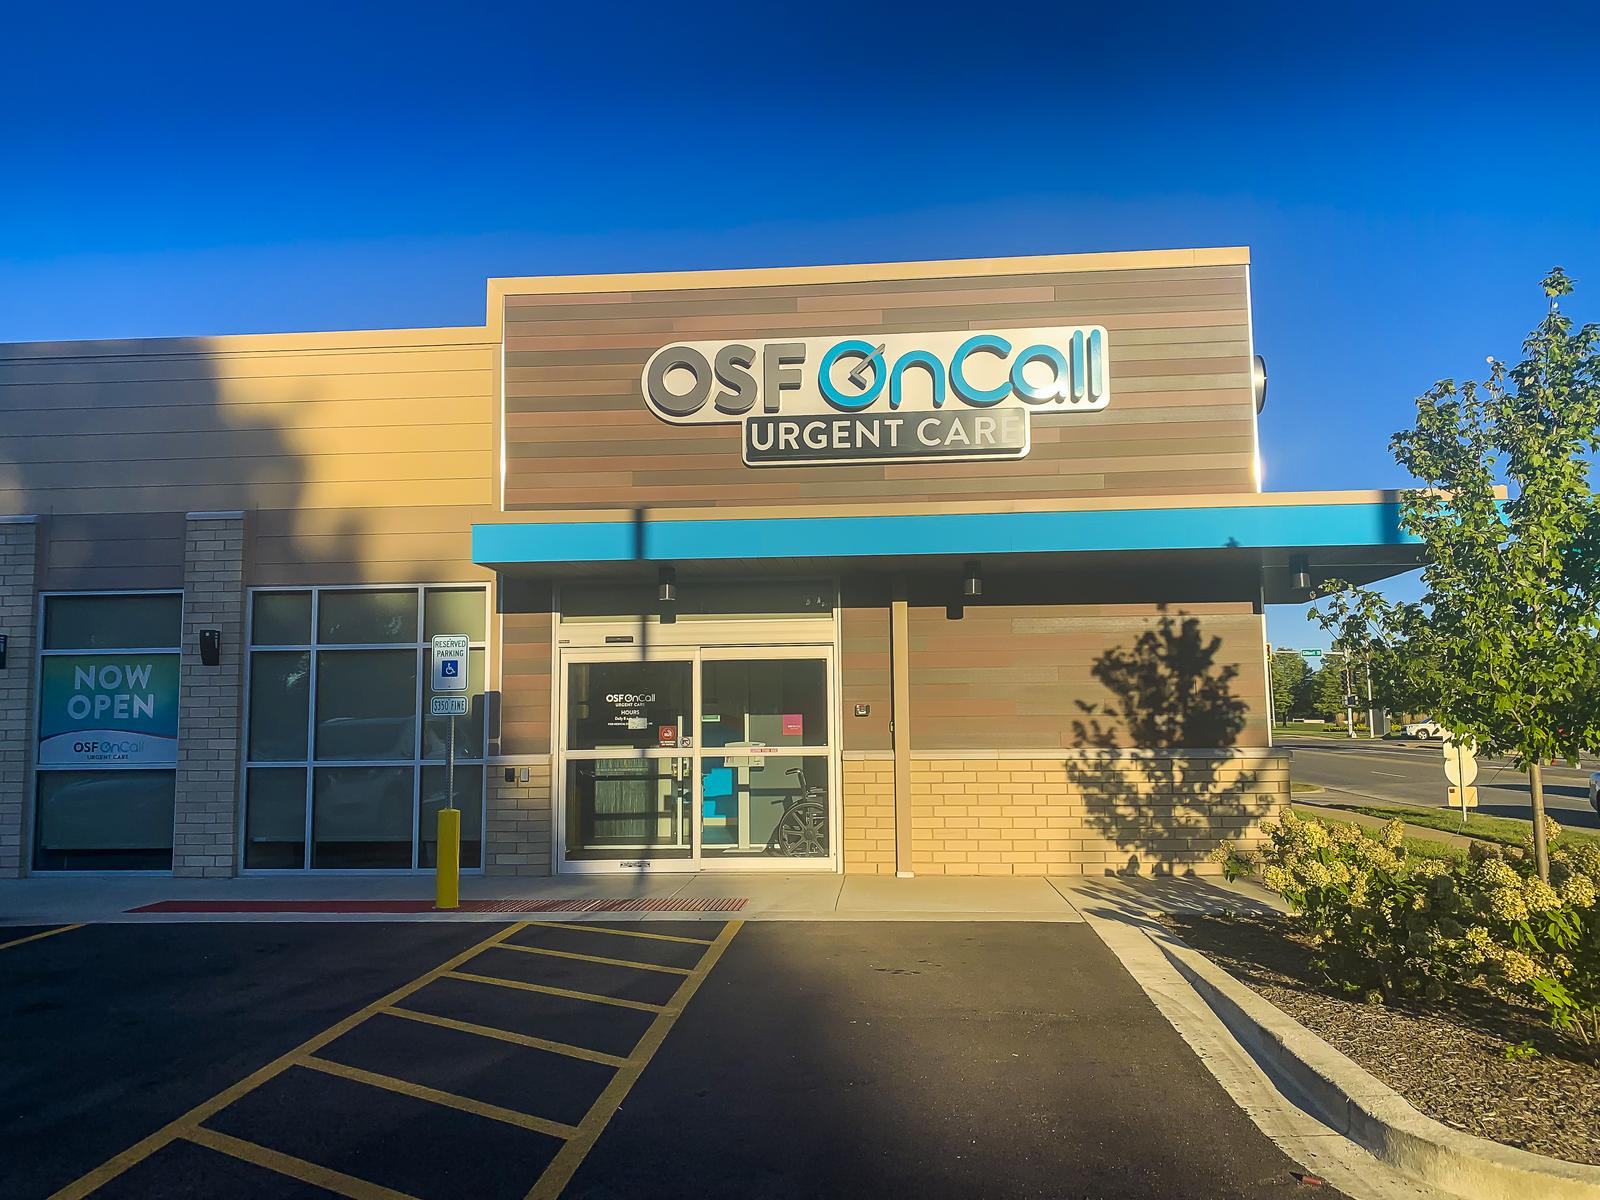 OSF OnCall Urgent Care, 1 N. Logan Avenue, Danville, Illinois, 61832